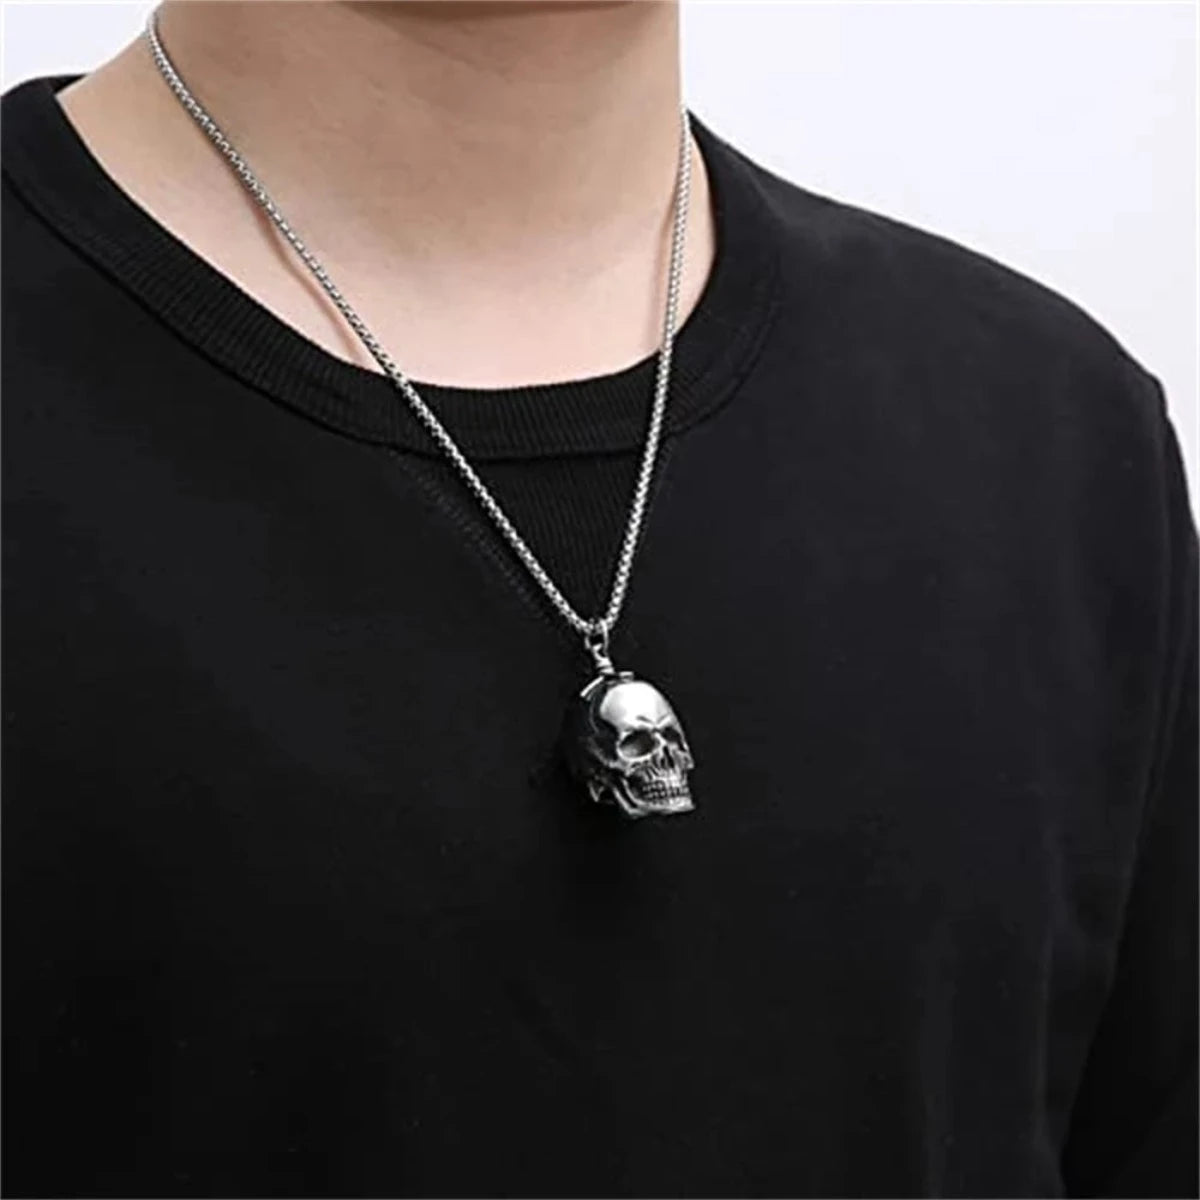 Gothic Punk Skull Necklace